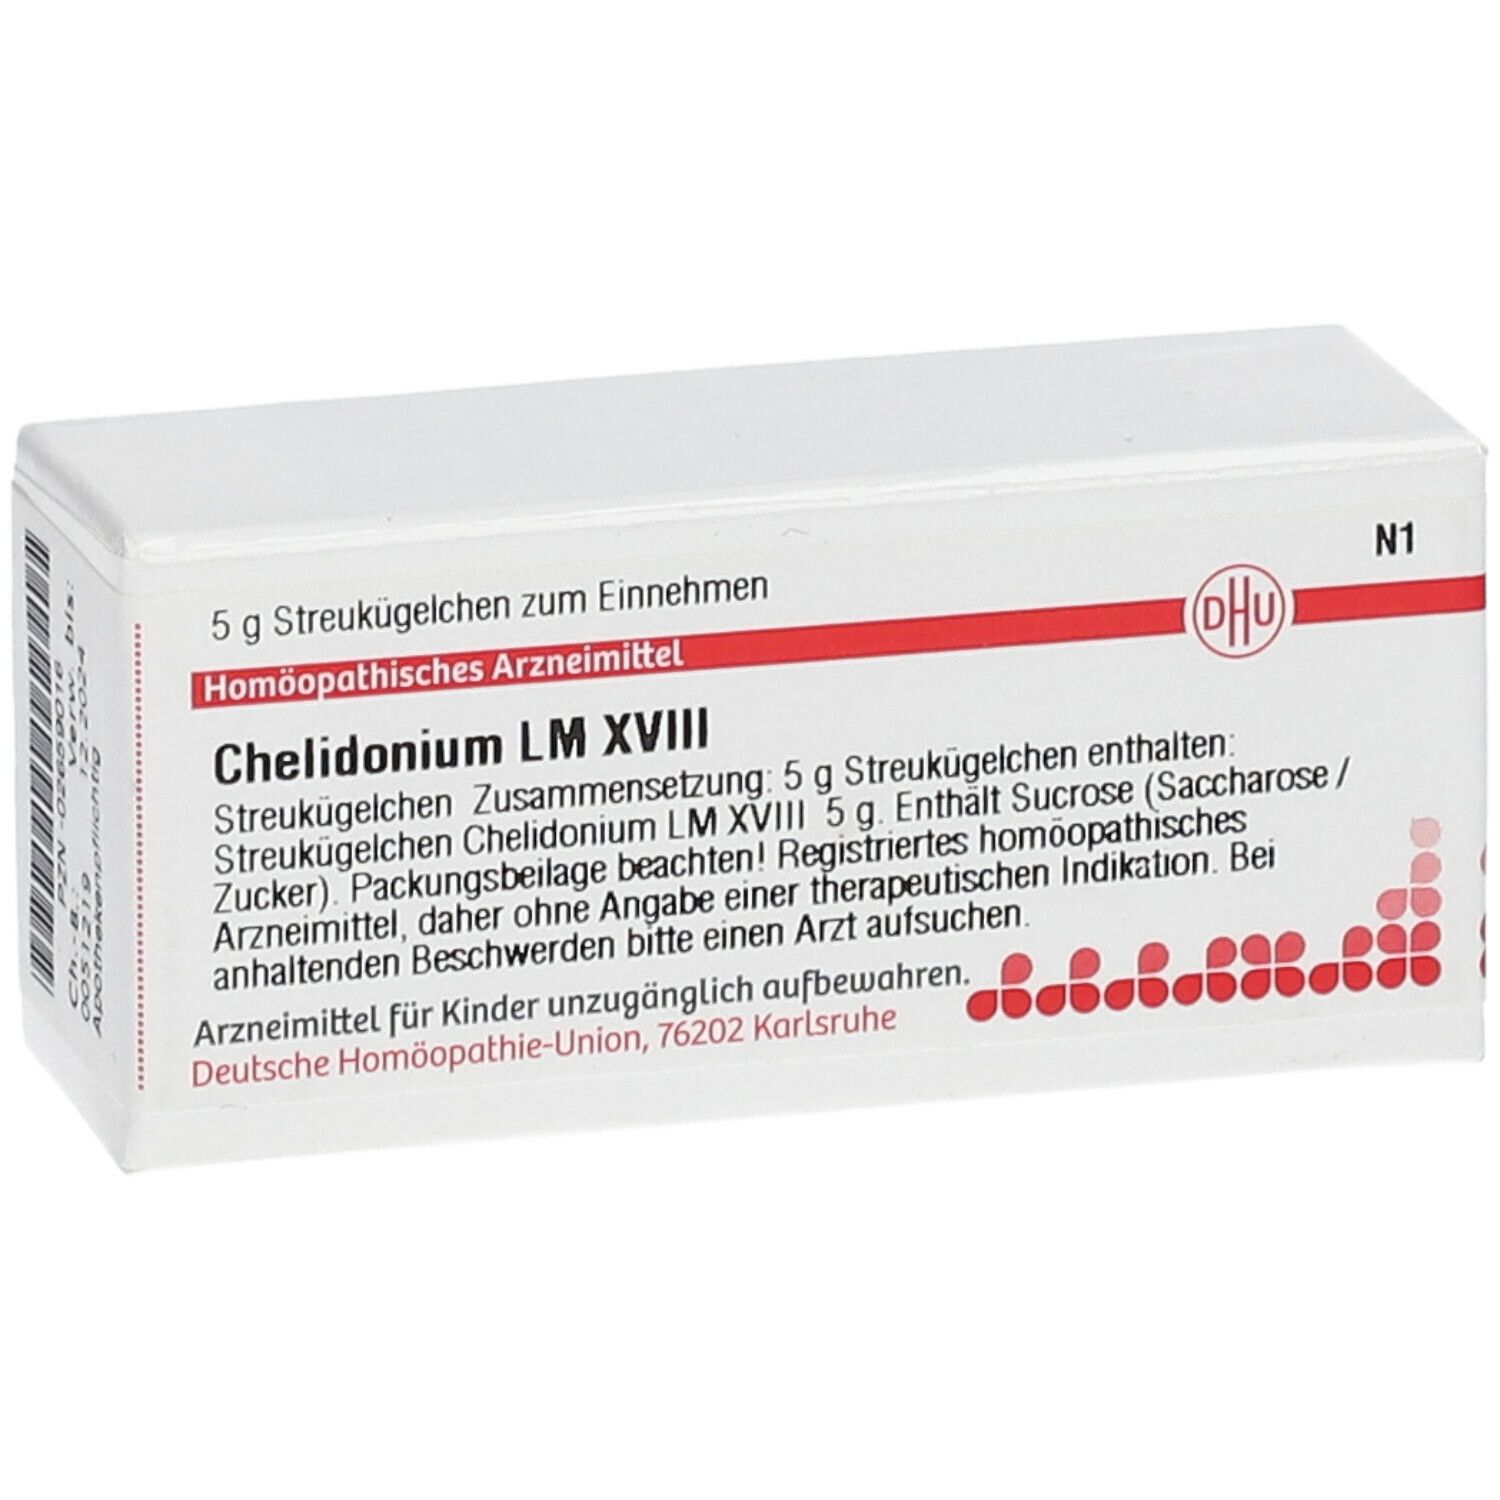 DHU Chelidonium LM XVIII